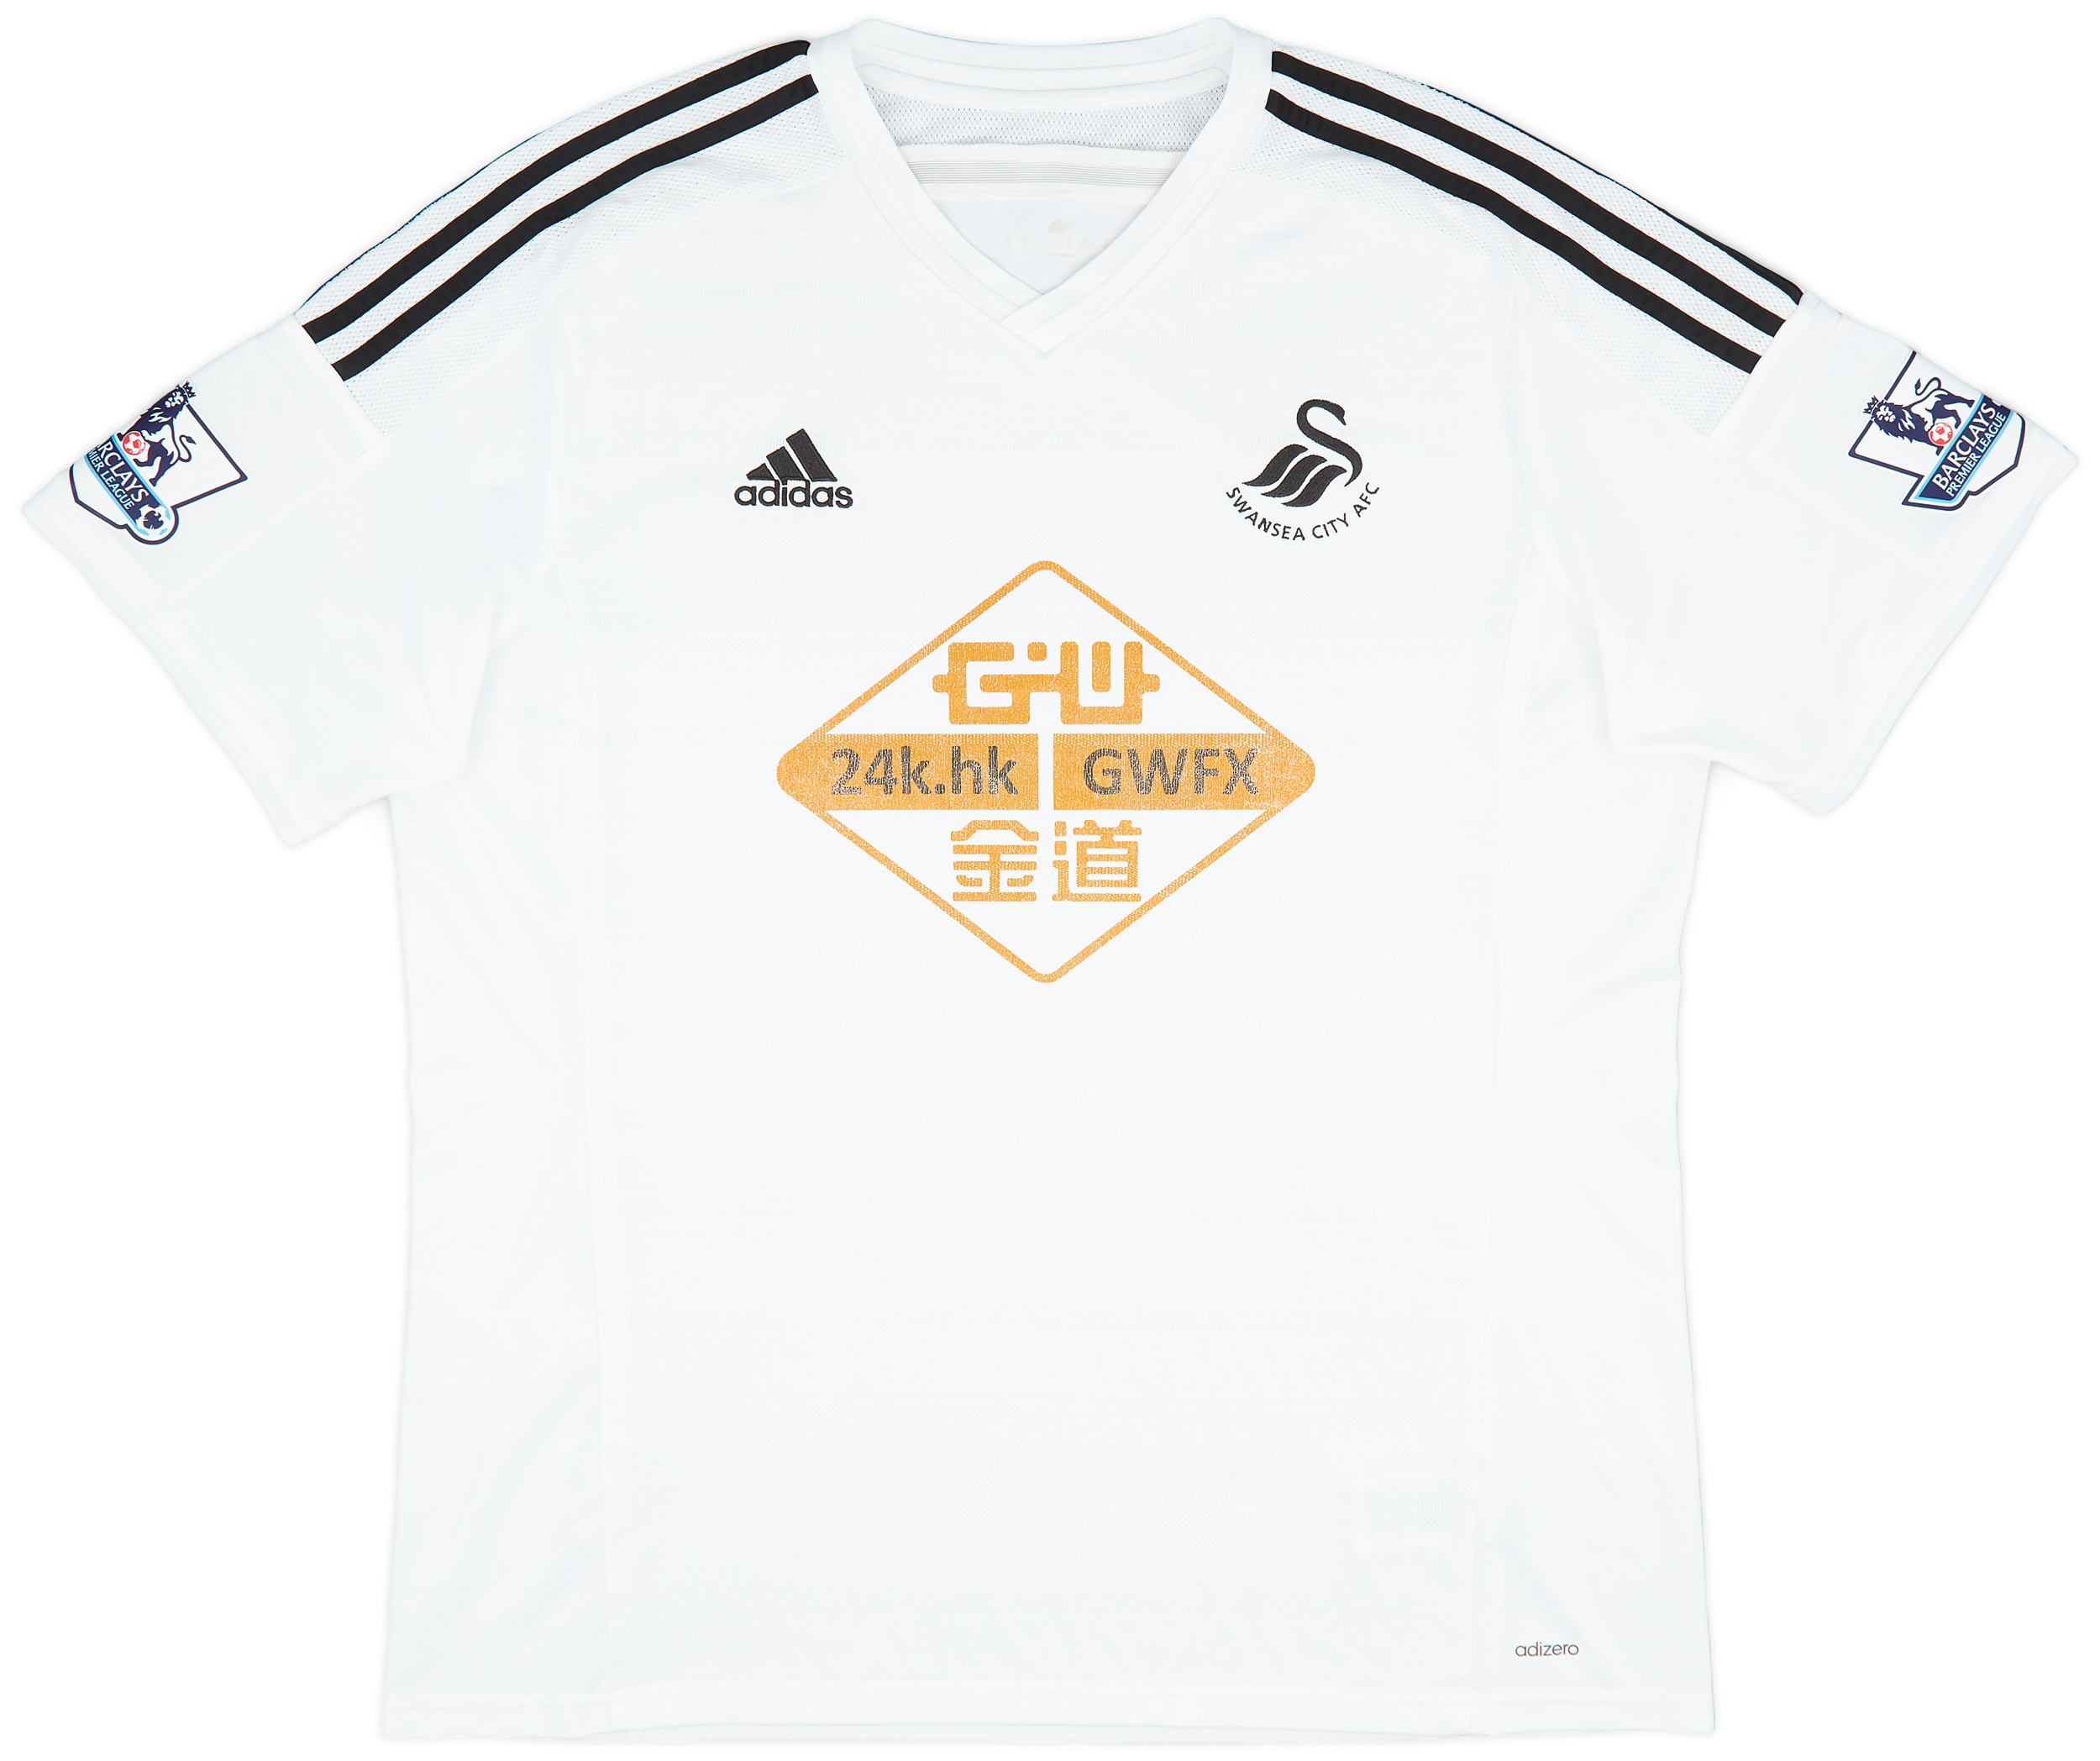 2014-15 Swansea City Home Shirt - 6/10 - ()